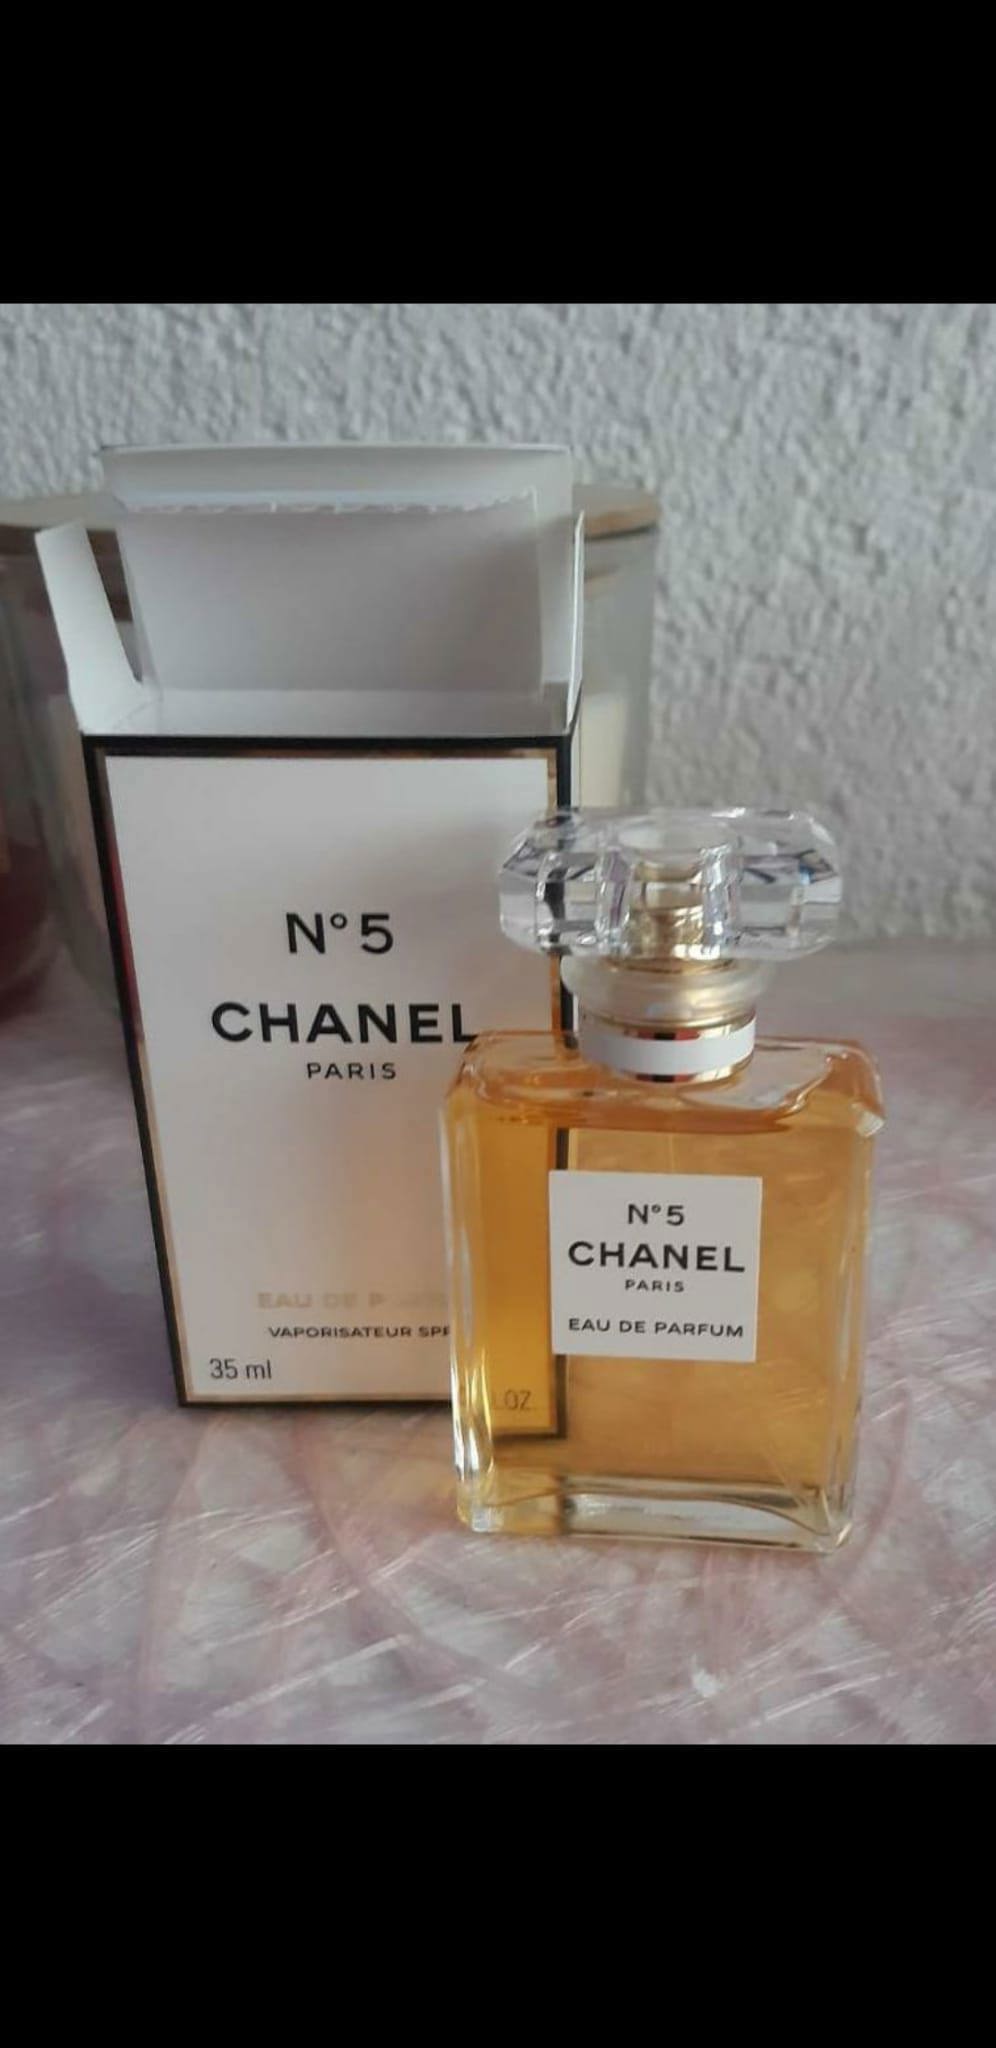 Chanel no 5 